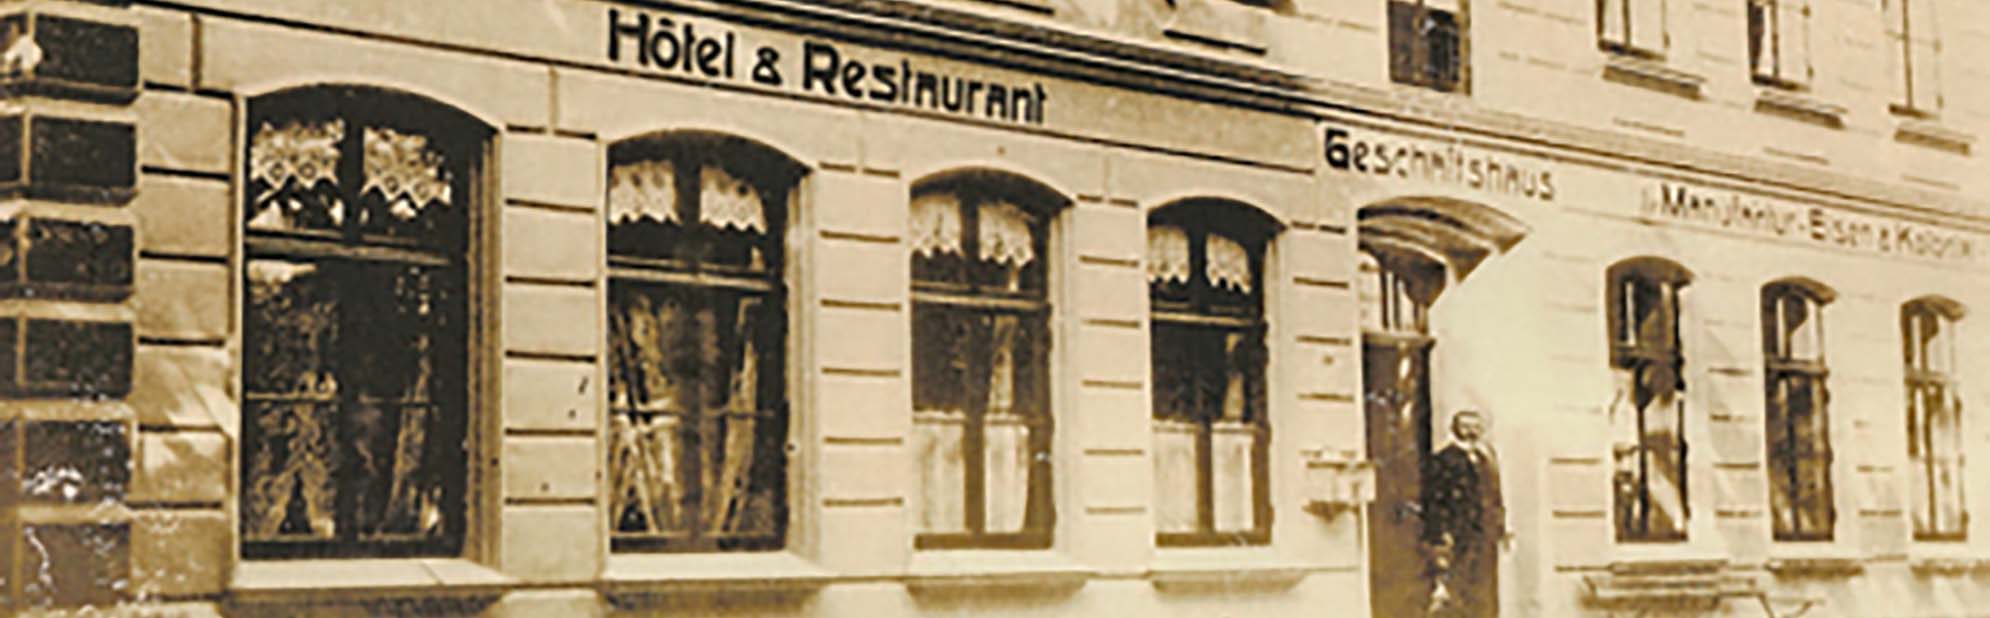 Hotel Schute